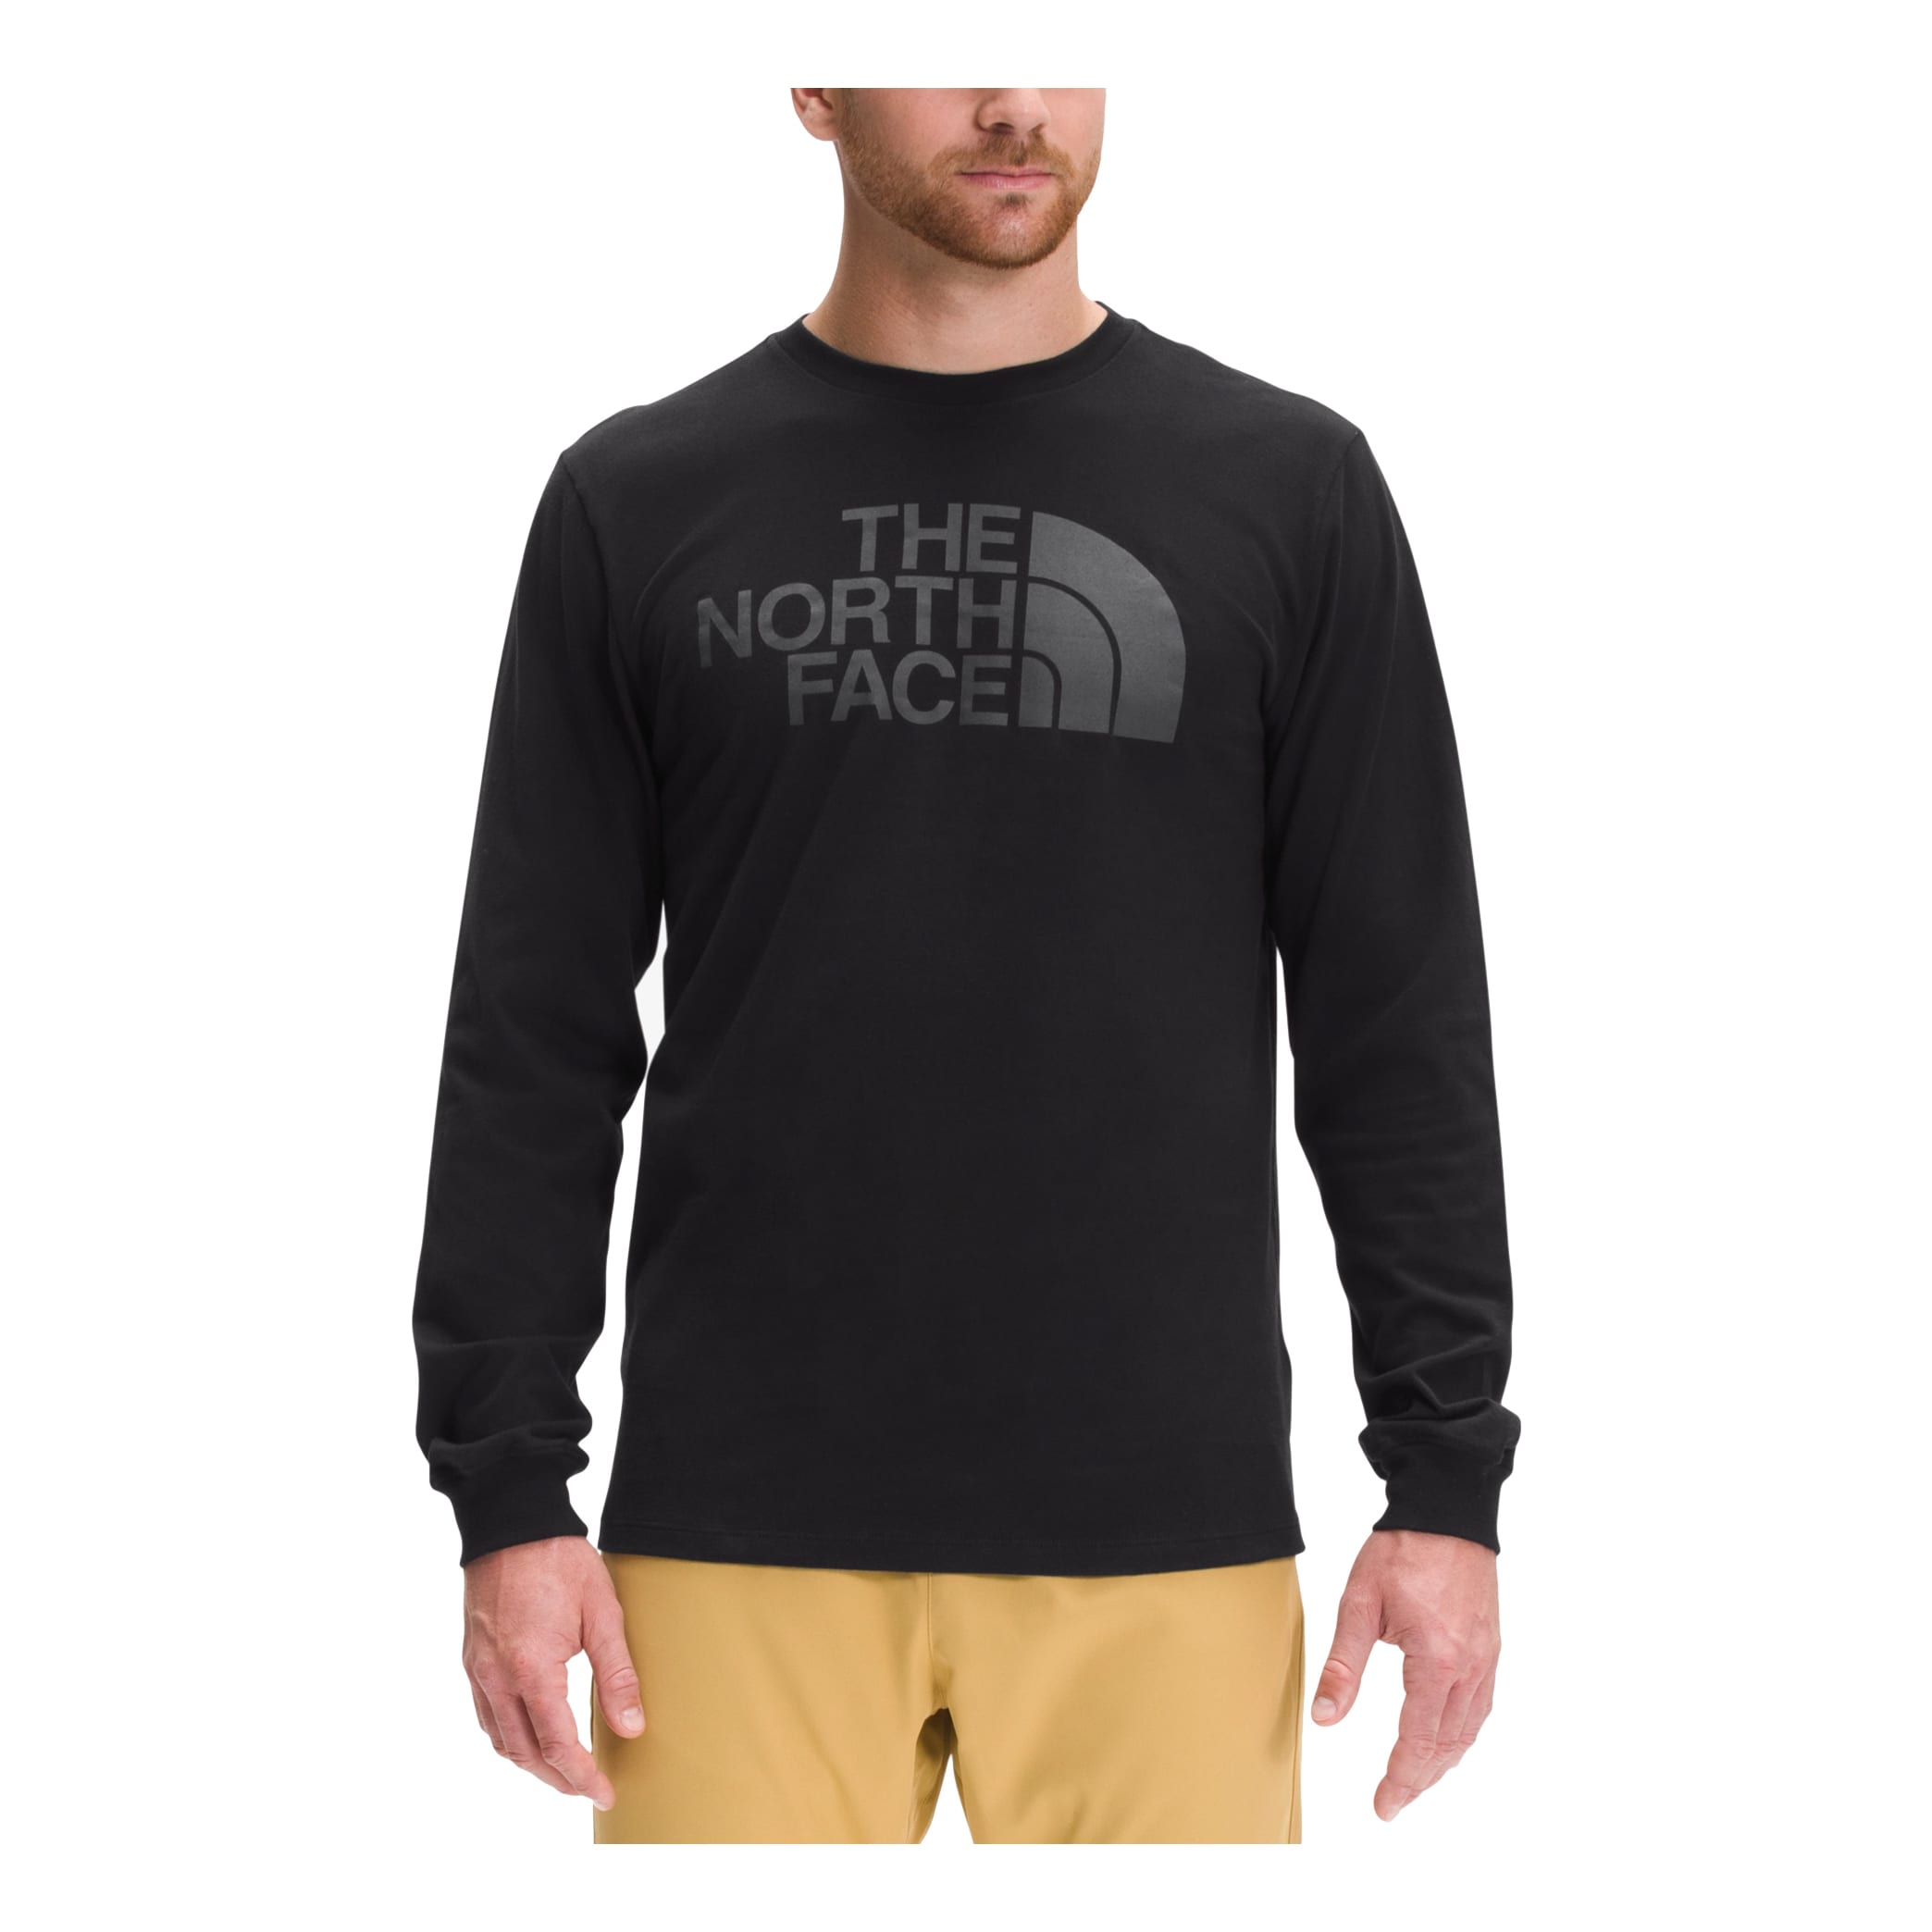 The North Face® Men’s Long Sleeve Half Dome T-Shirt - TNF Black/Asphalt Grey